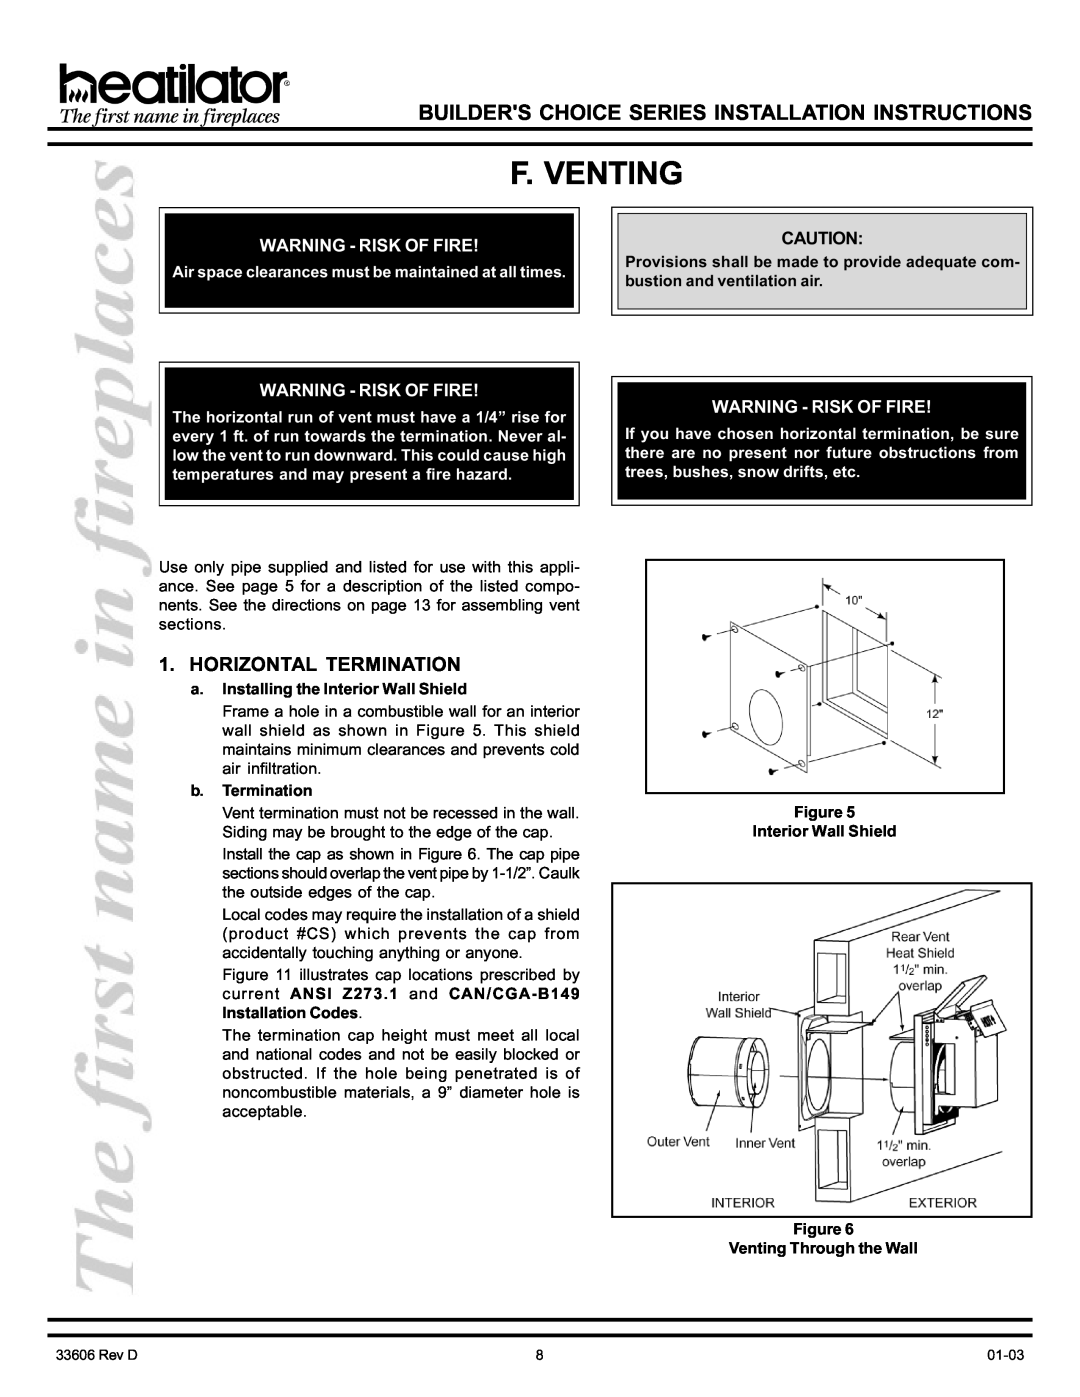 Heatiator BCDV36 manual F. Venting, Horizontal Termination, Warning - Risk Of Fire, a.Installing the Interior Wall Shield 